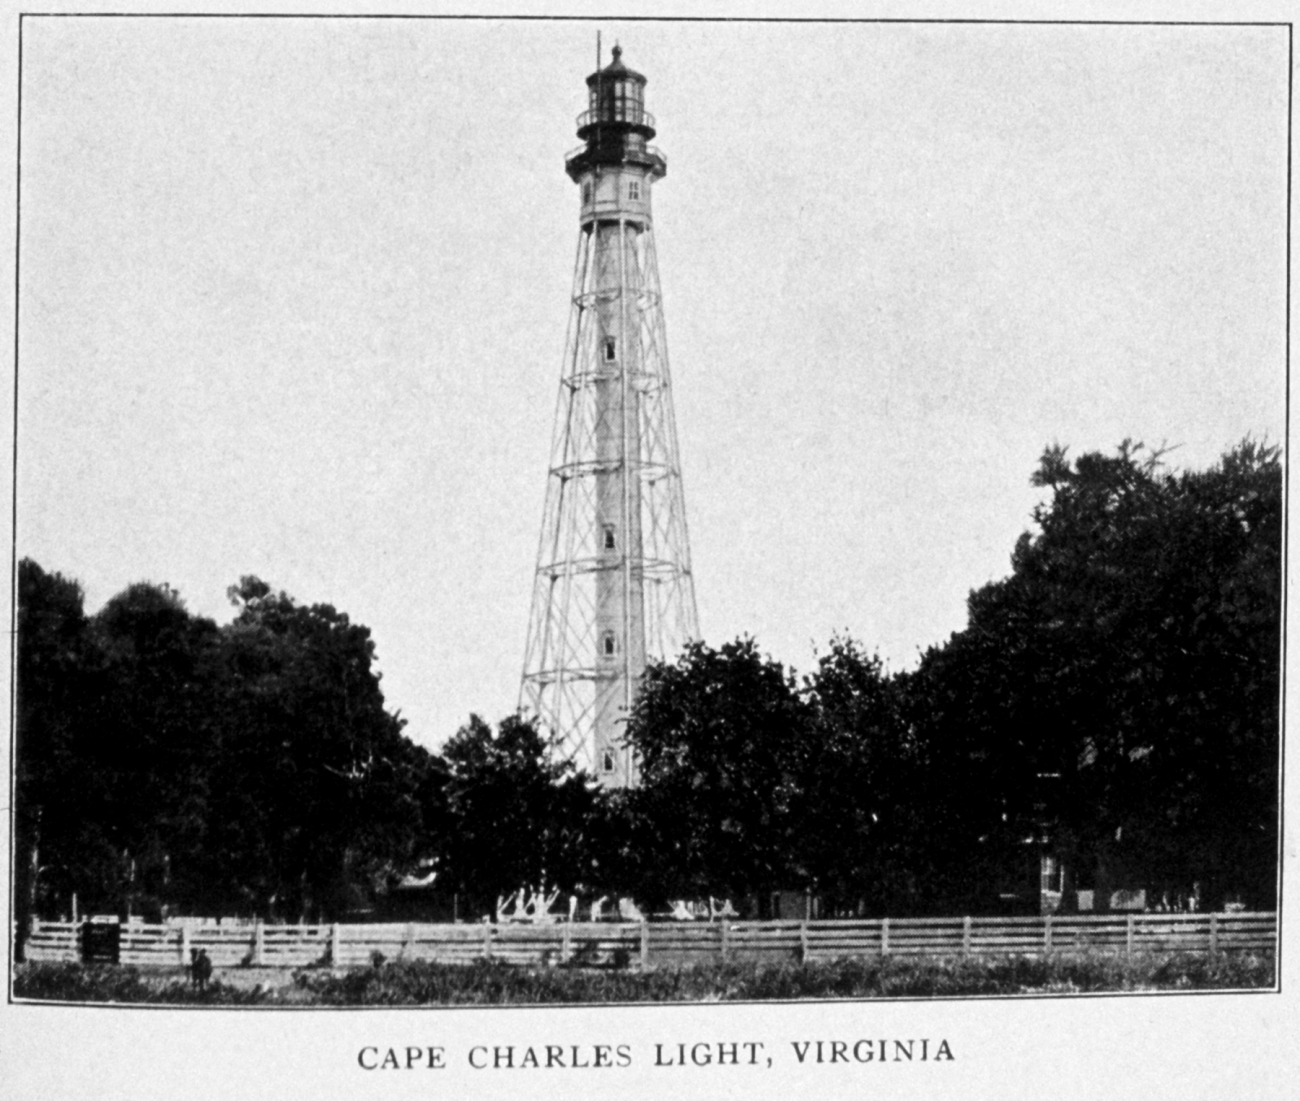 Cape Charles Light, Virginia